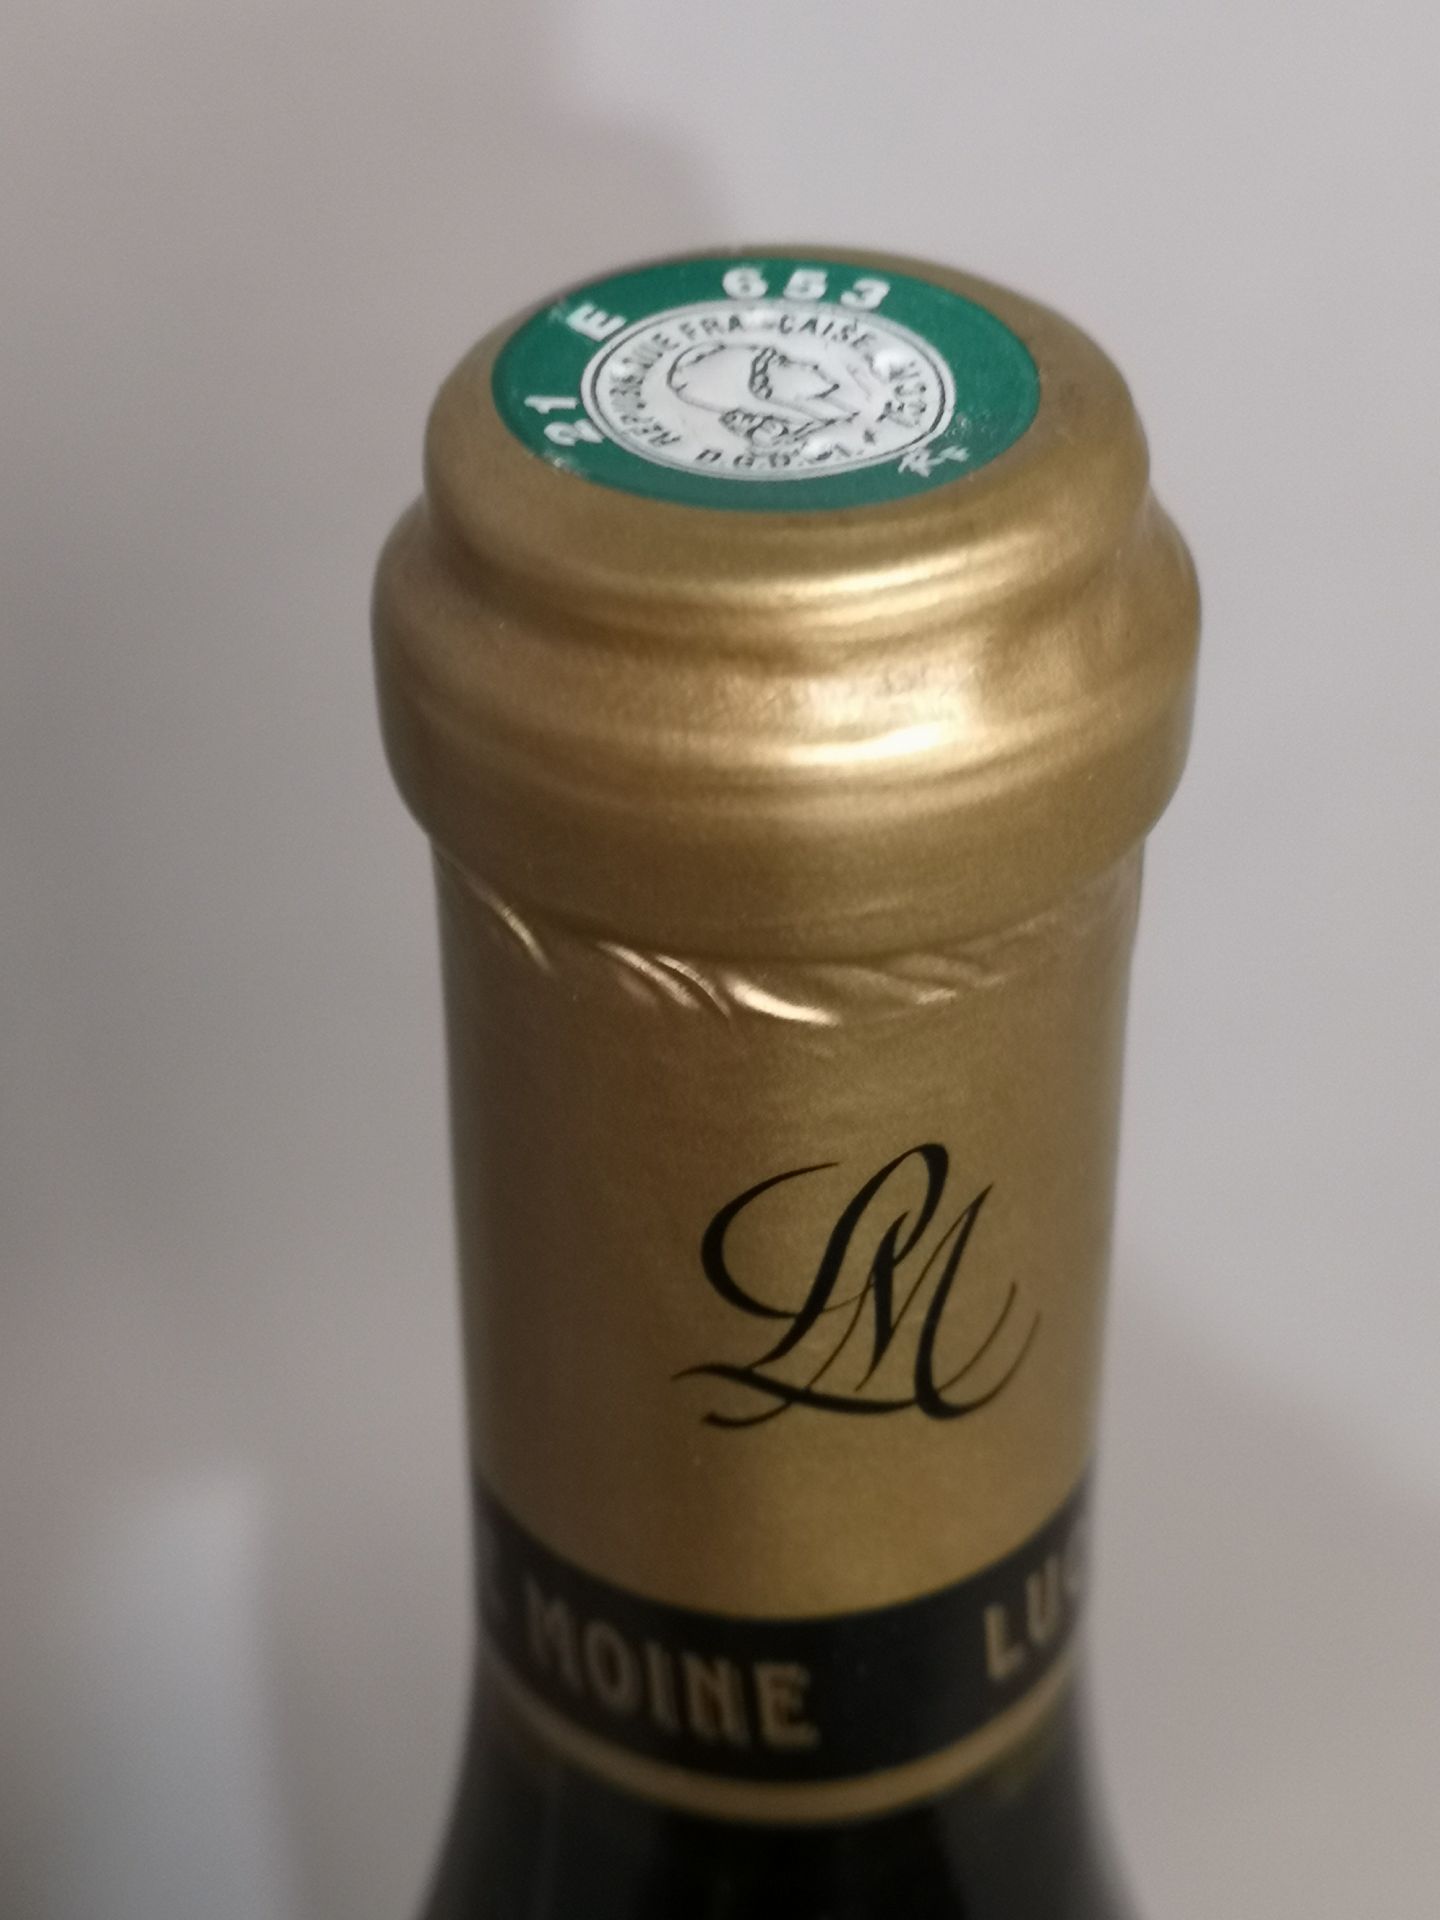 1 closed bottle of La Roche Grand Cru - Lucien Le Moine 2012. - Image 2 of 2